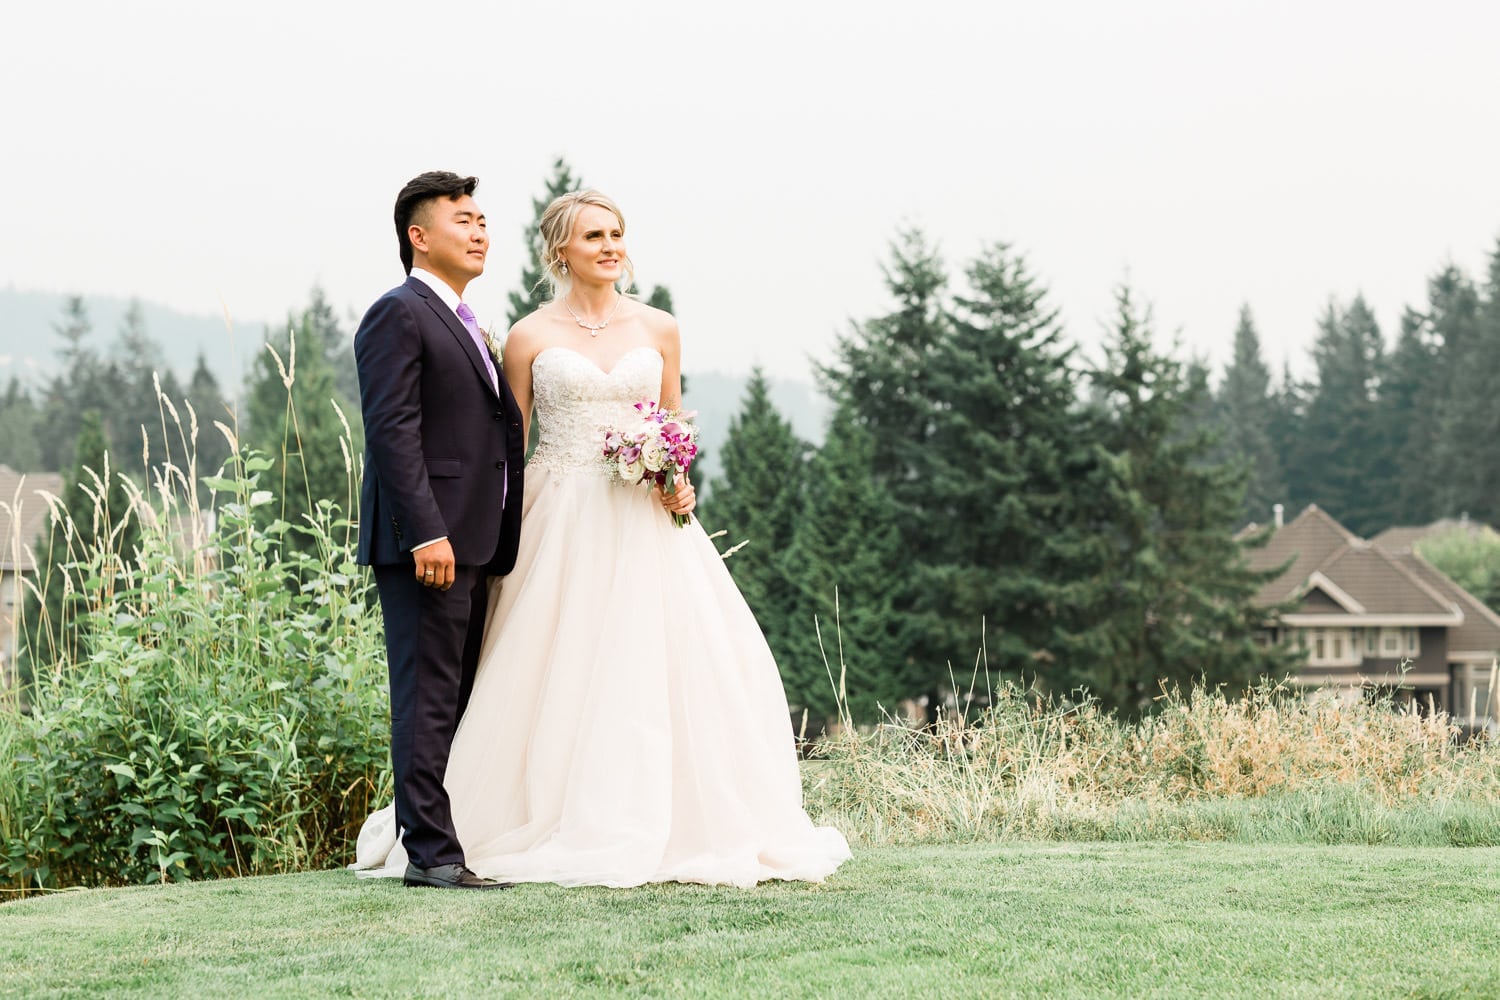 Bride and groom portrait | Vancouver wedding photographer | Westwood Plateau Golf Club Wedding